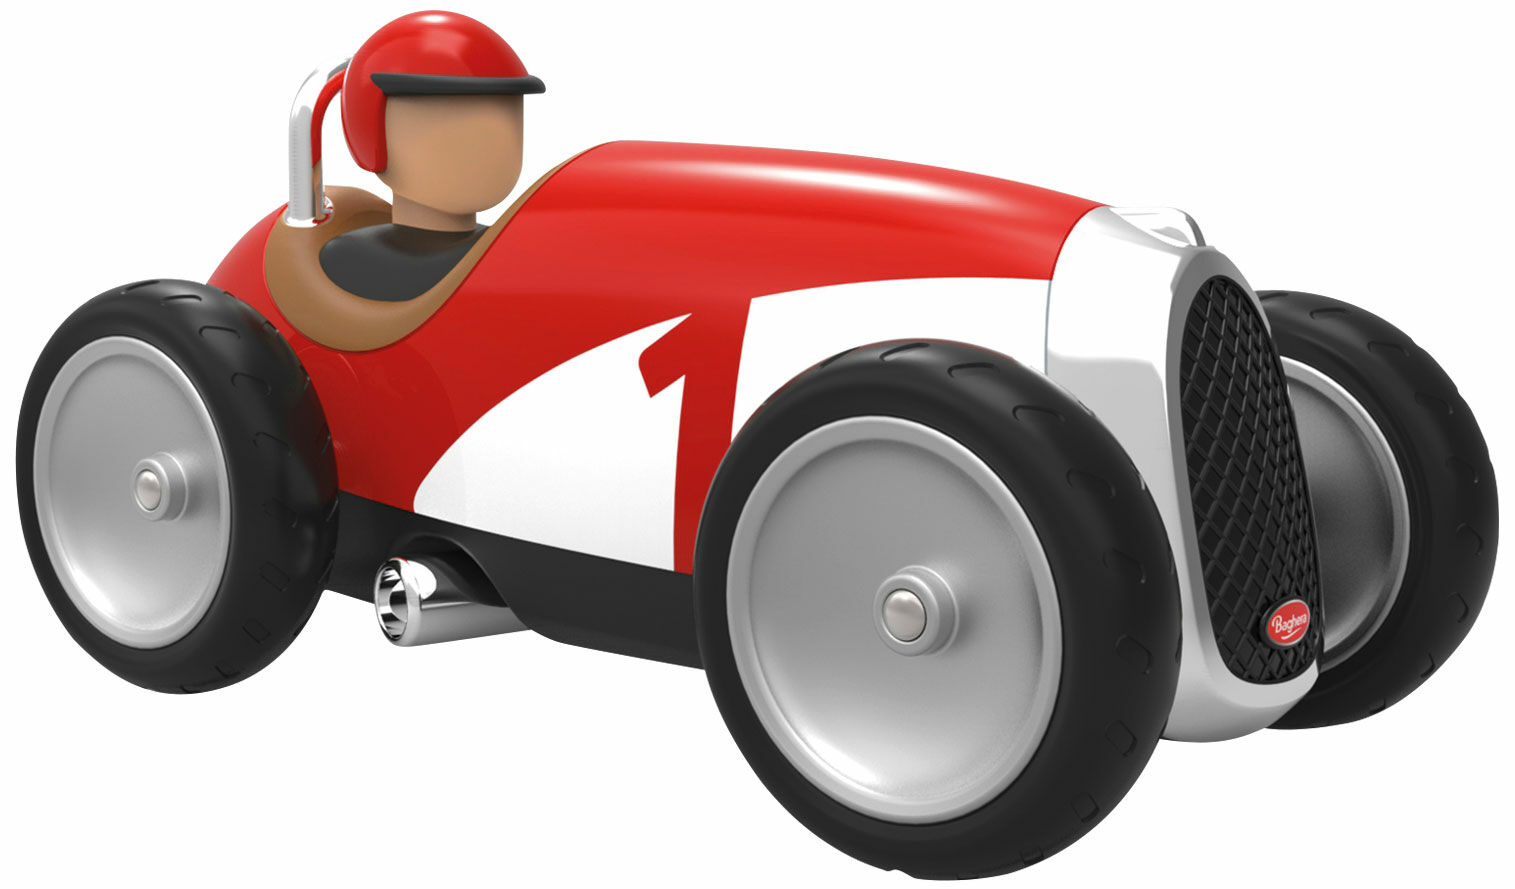 Legetøjsbil "Racing Car", rød version von Baghera